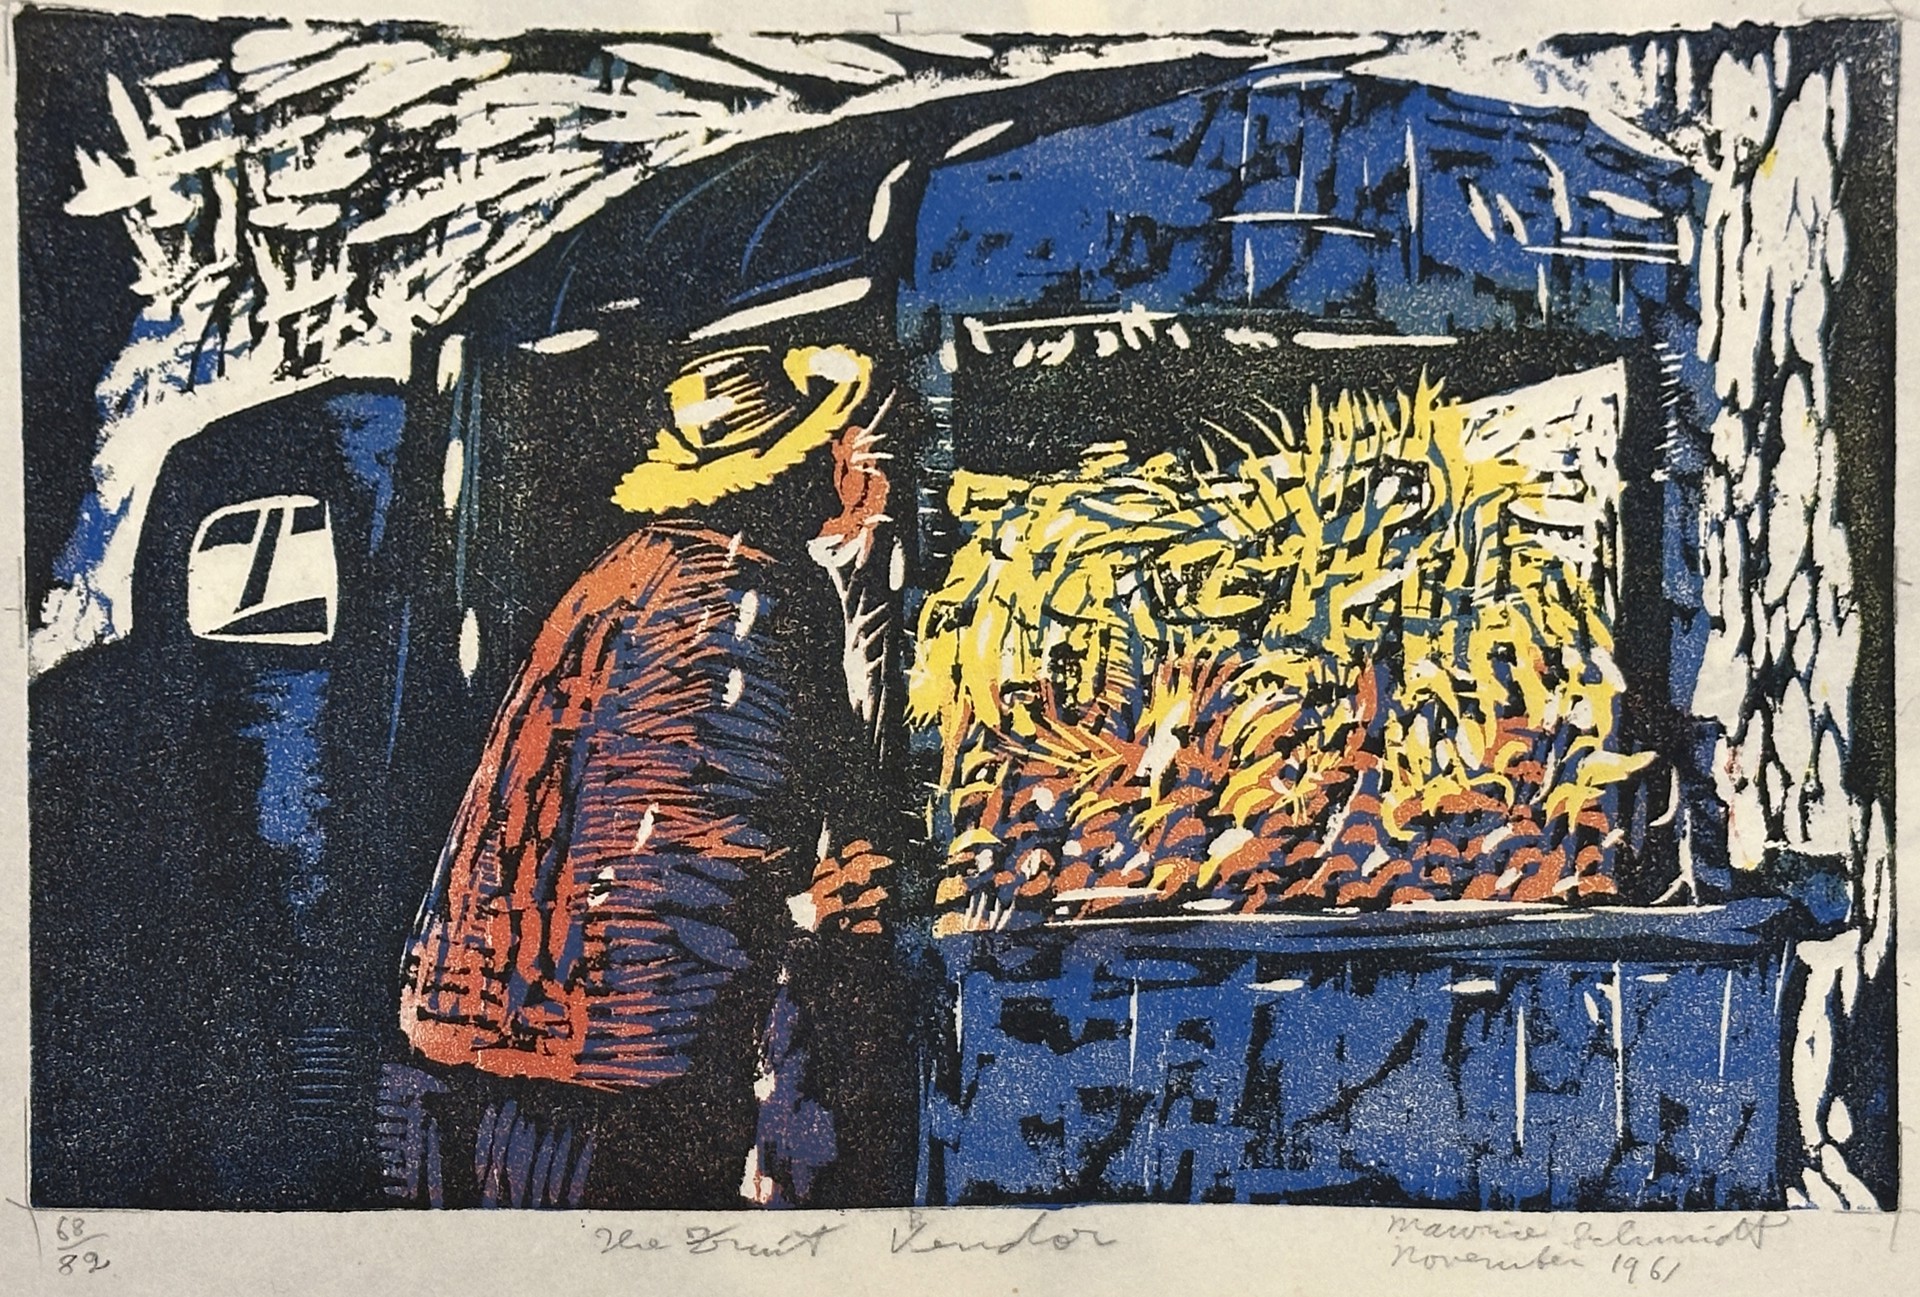 The Fruit Vendor by Maurice Schmidt